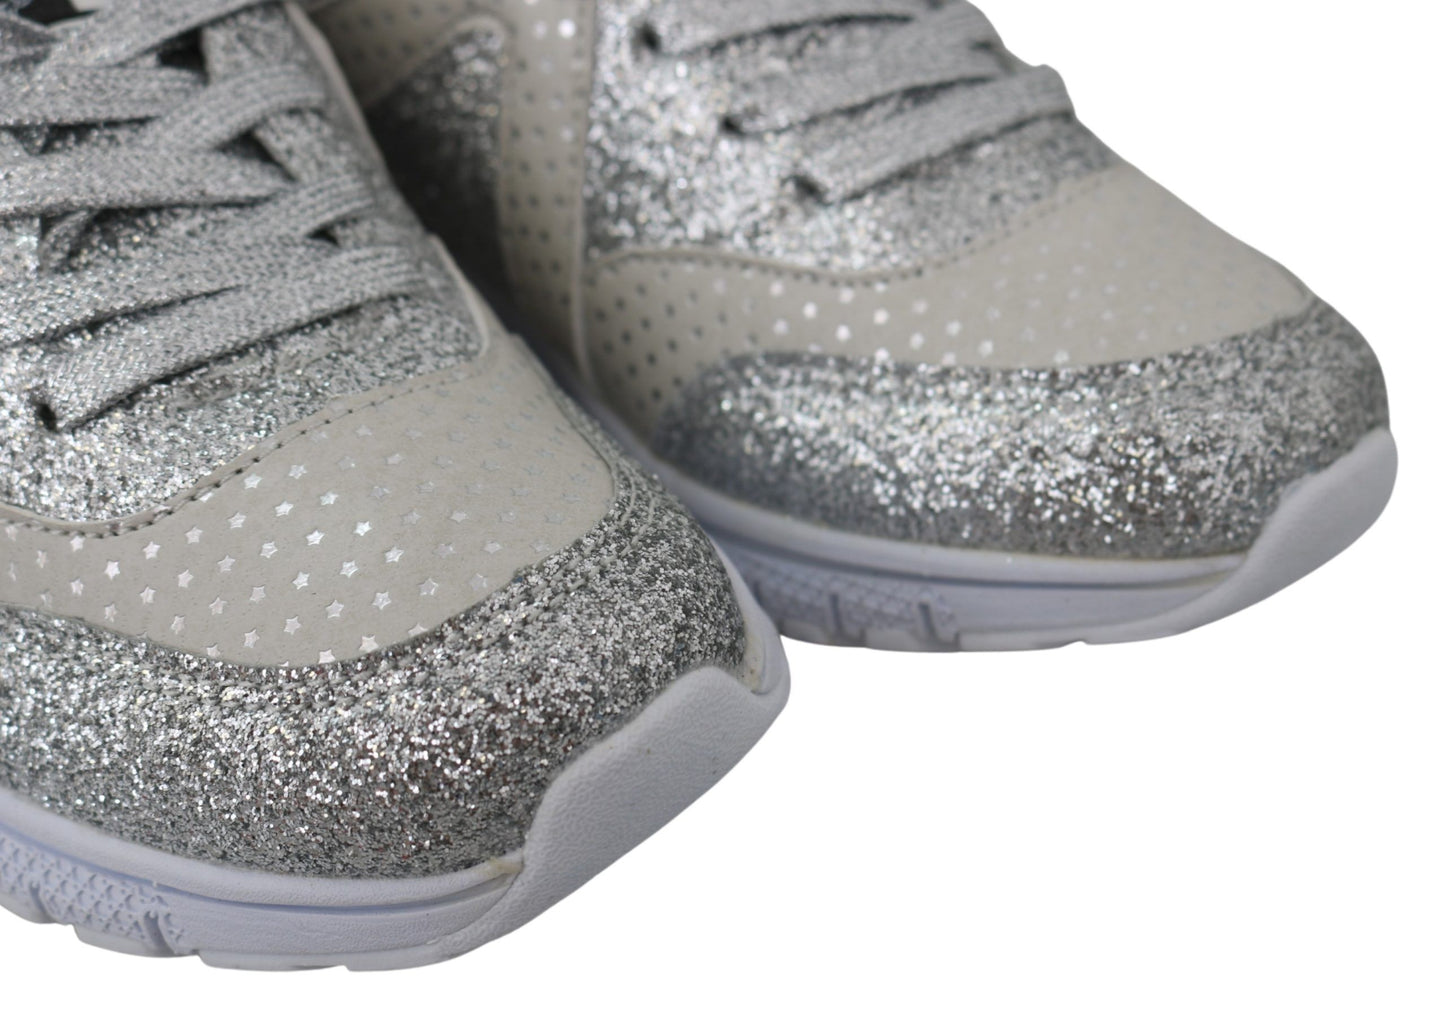 Plein Sport Silver Polyester Runner Jasmins Sneakers Chaussures